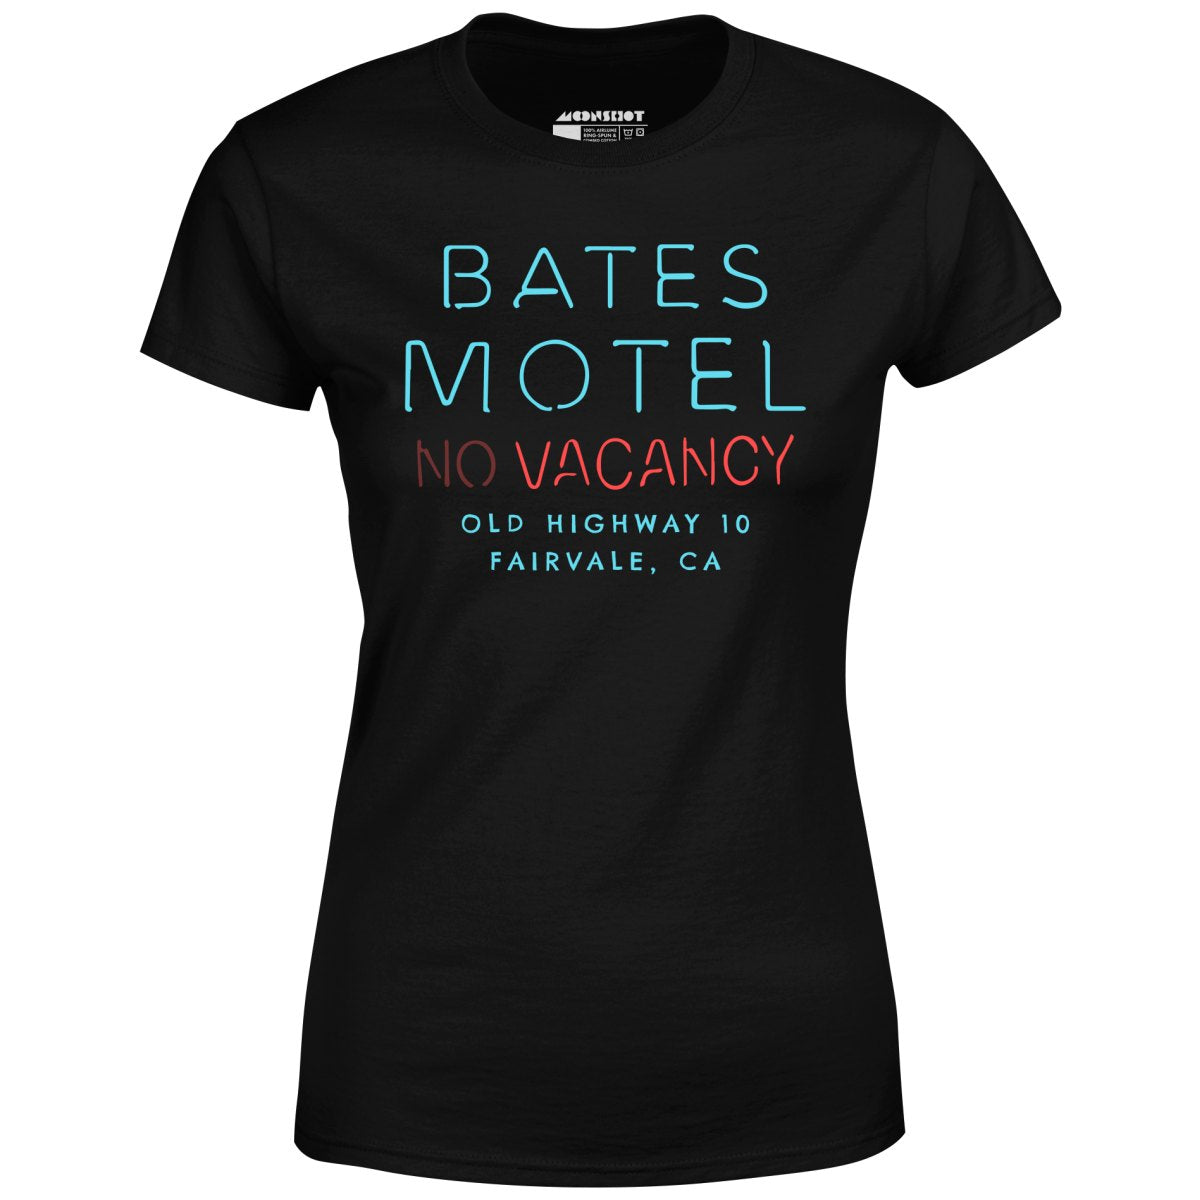 Bates Motel - Women's T-Shirt